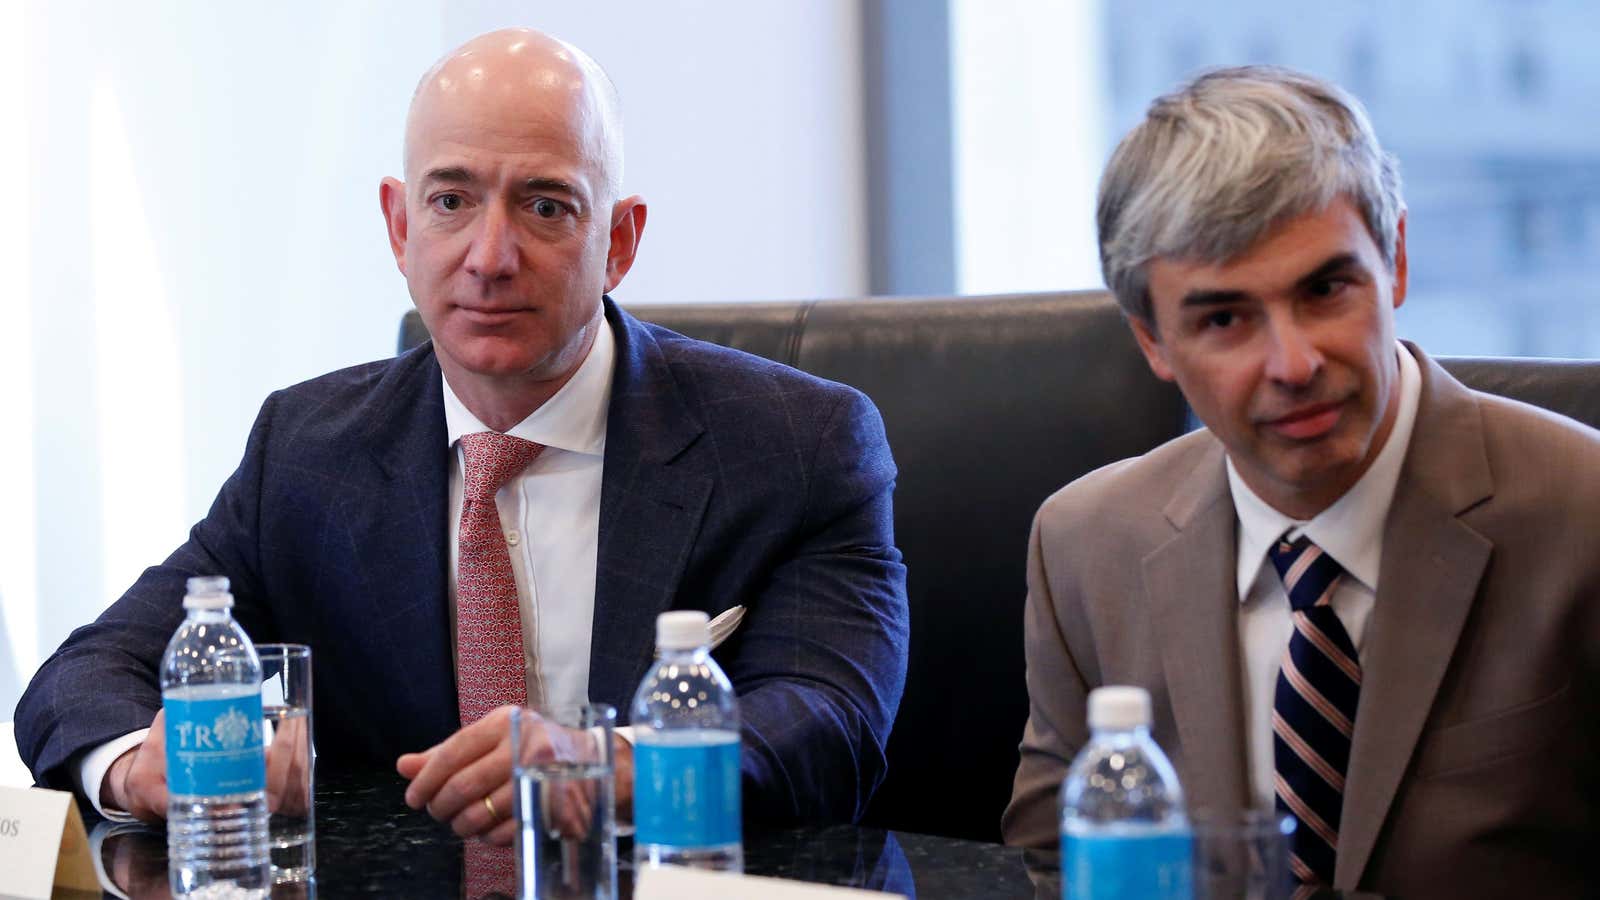 Jeff Bezos attends Trump’s technology summit in December 2016.